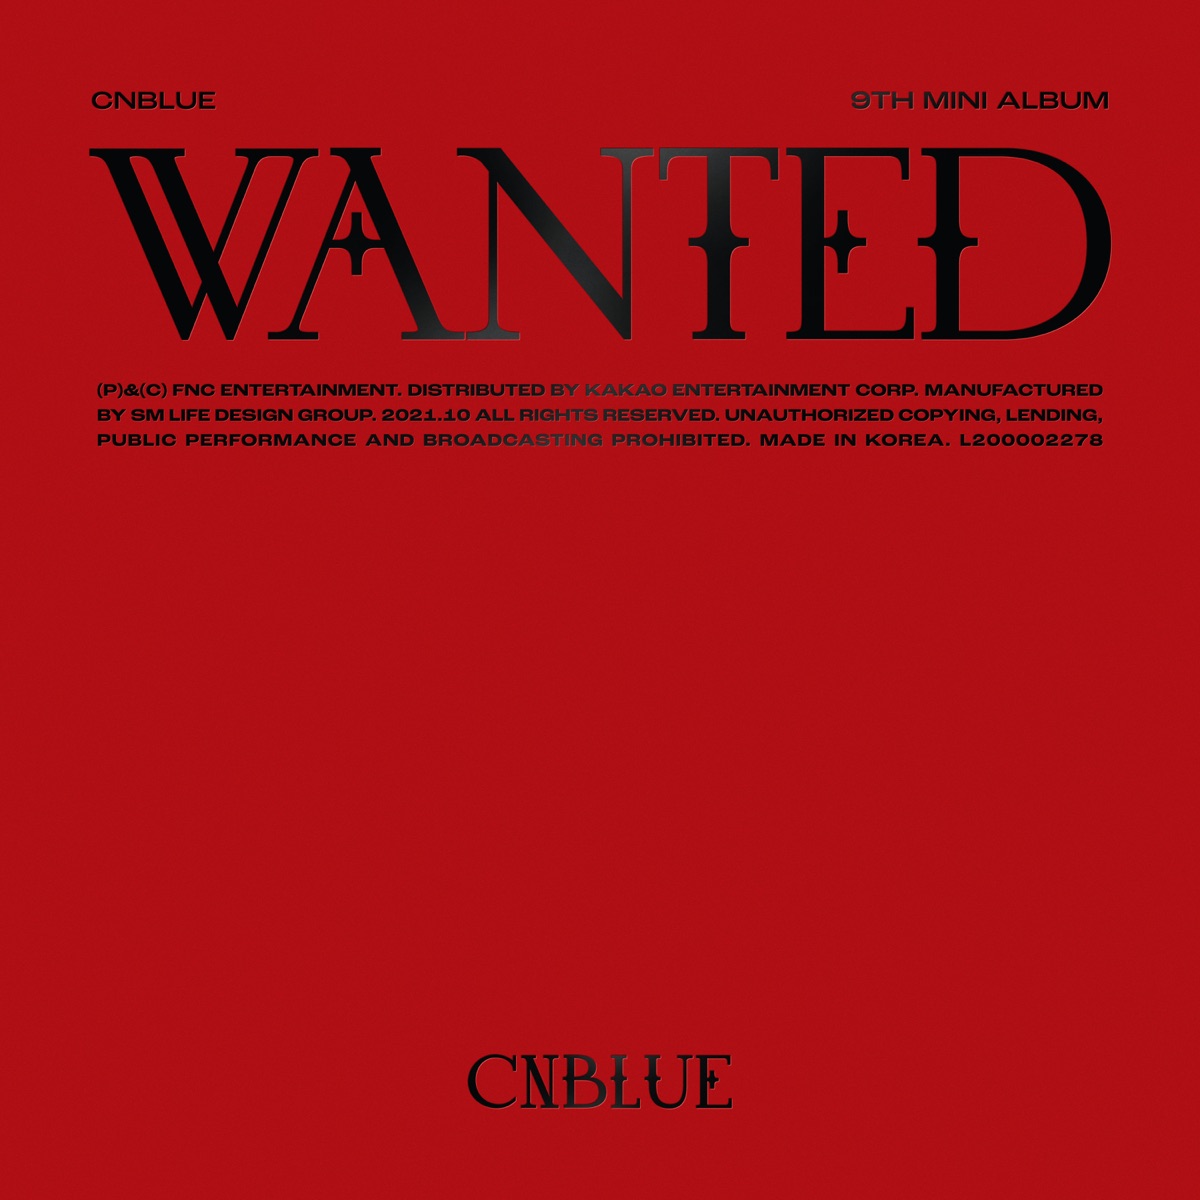 『CNBLUE - Time Capsule 歌詞』収録の『WANTED』ジャケット